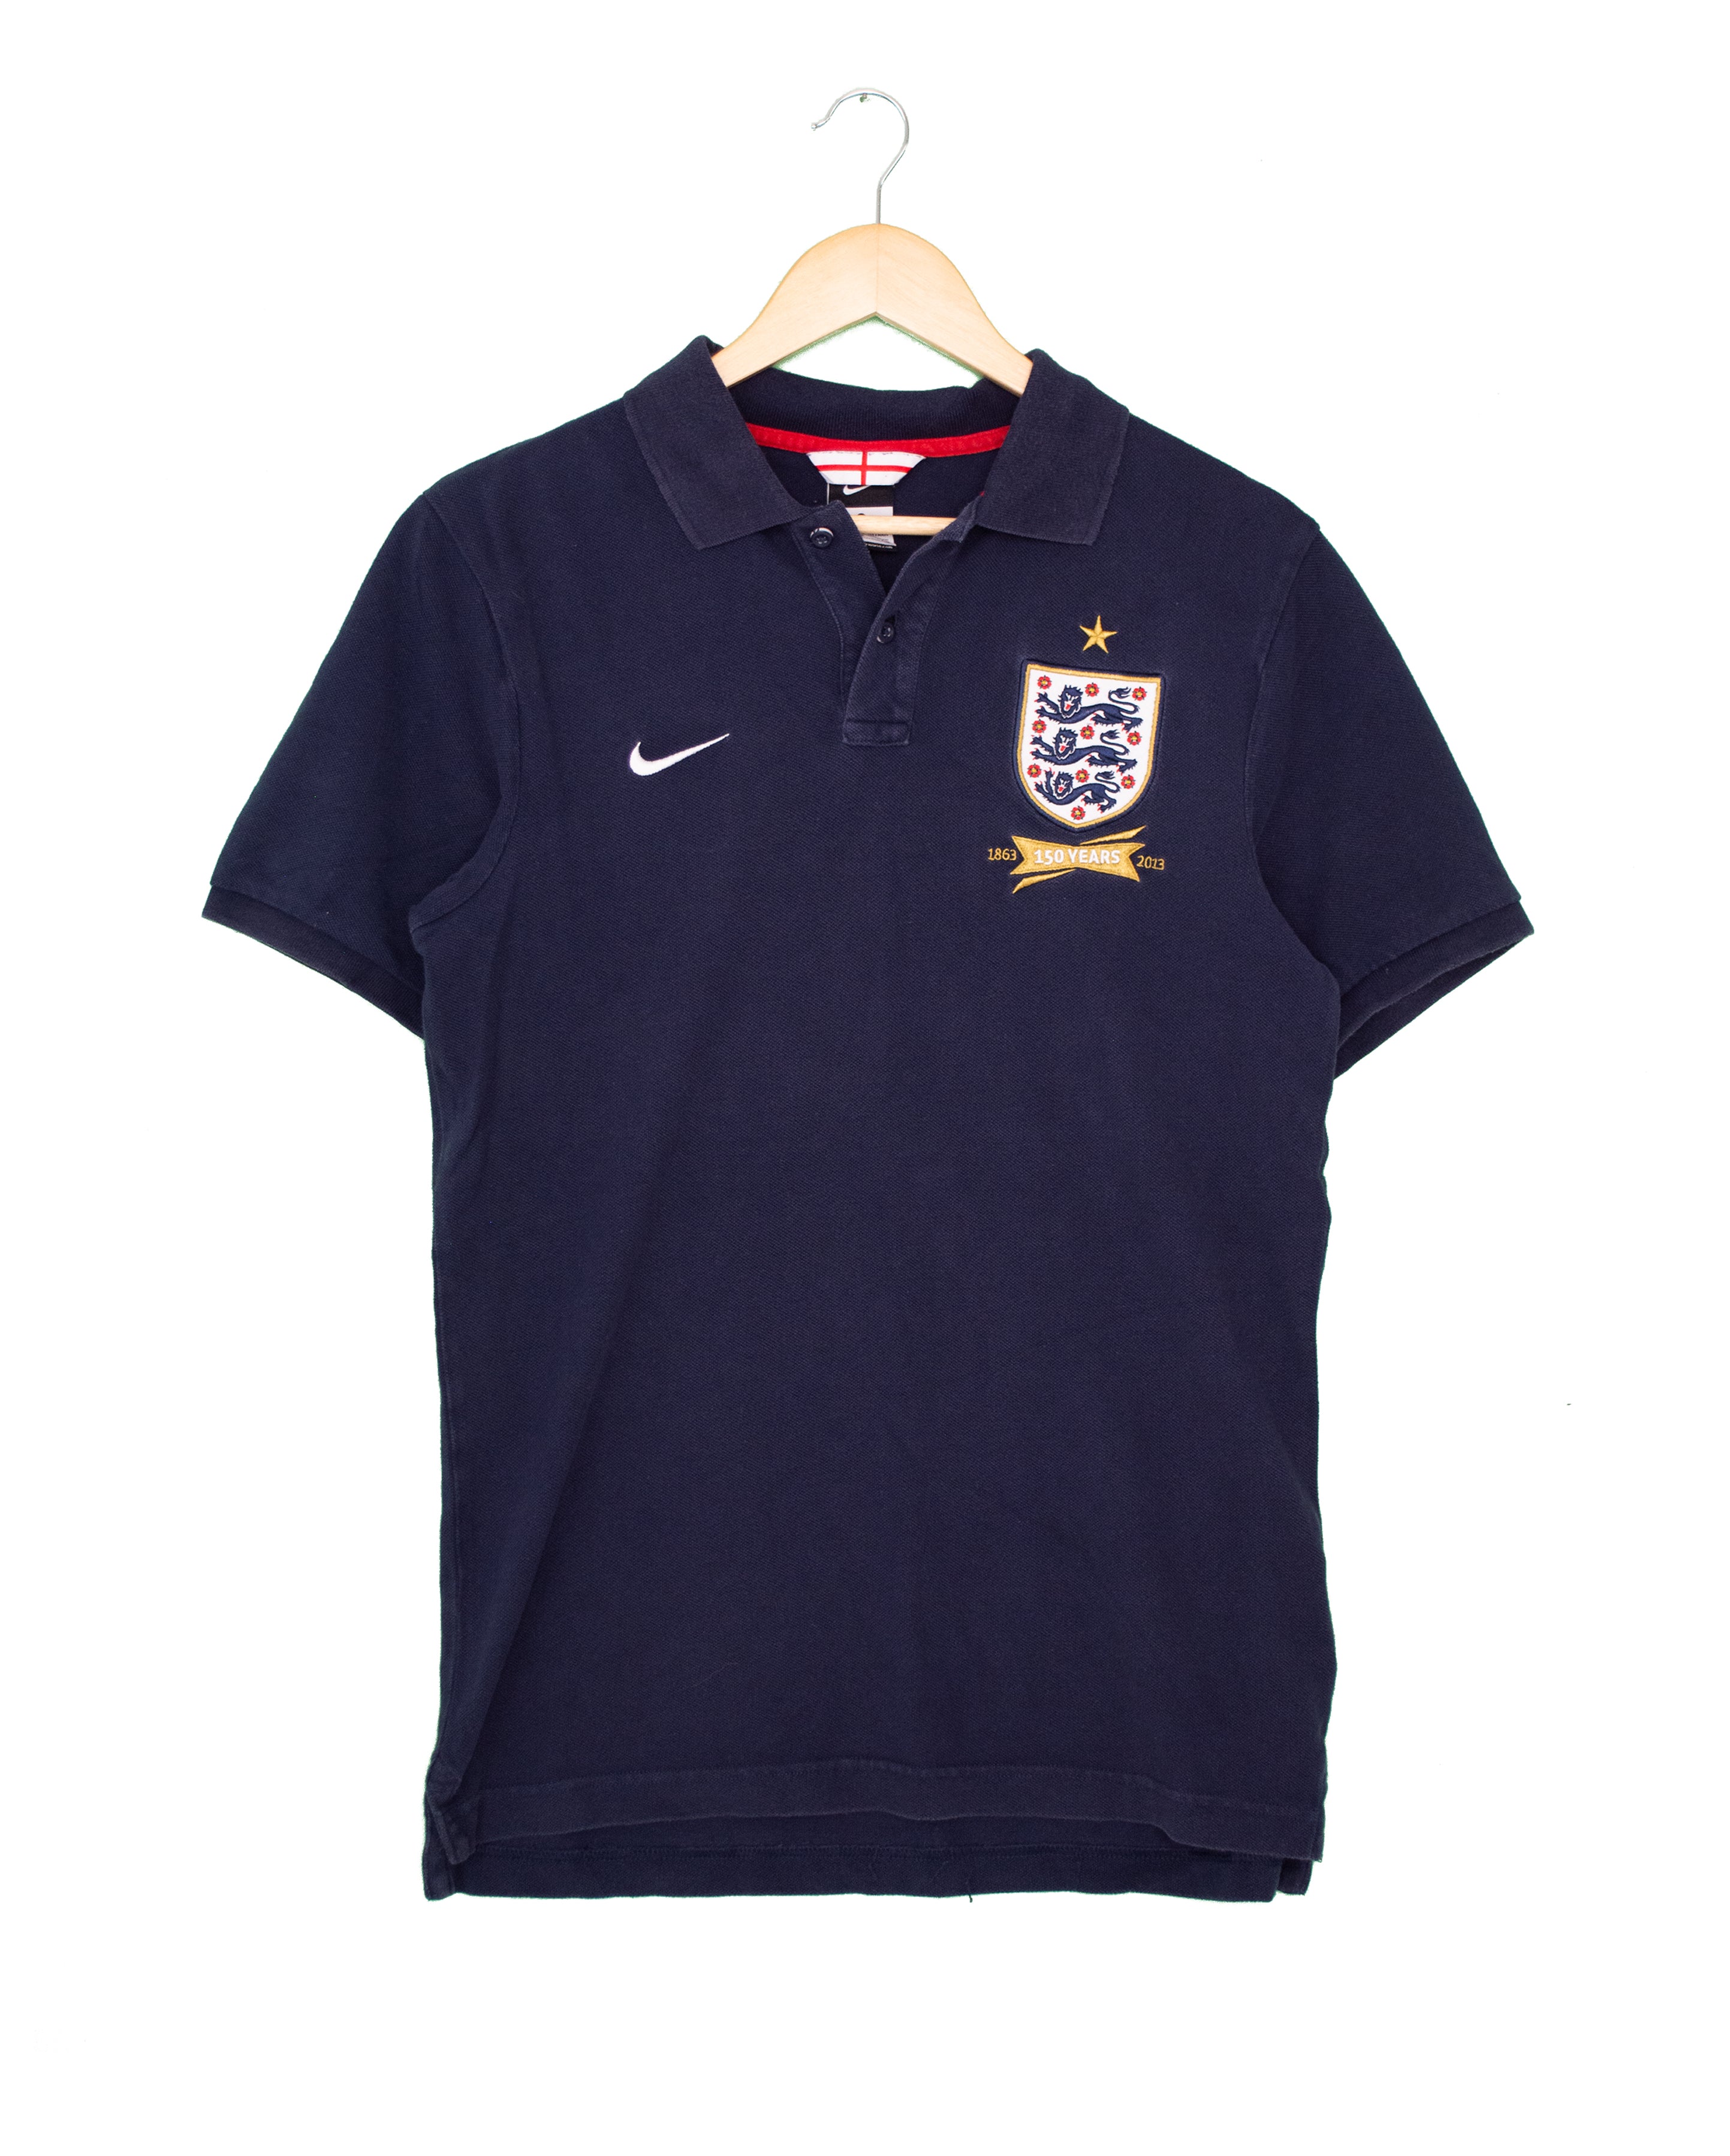 England 2013 Polo Shirt - S - #1601